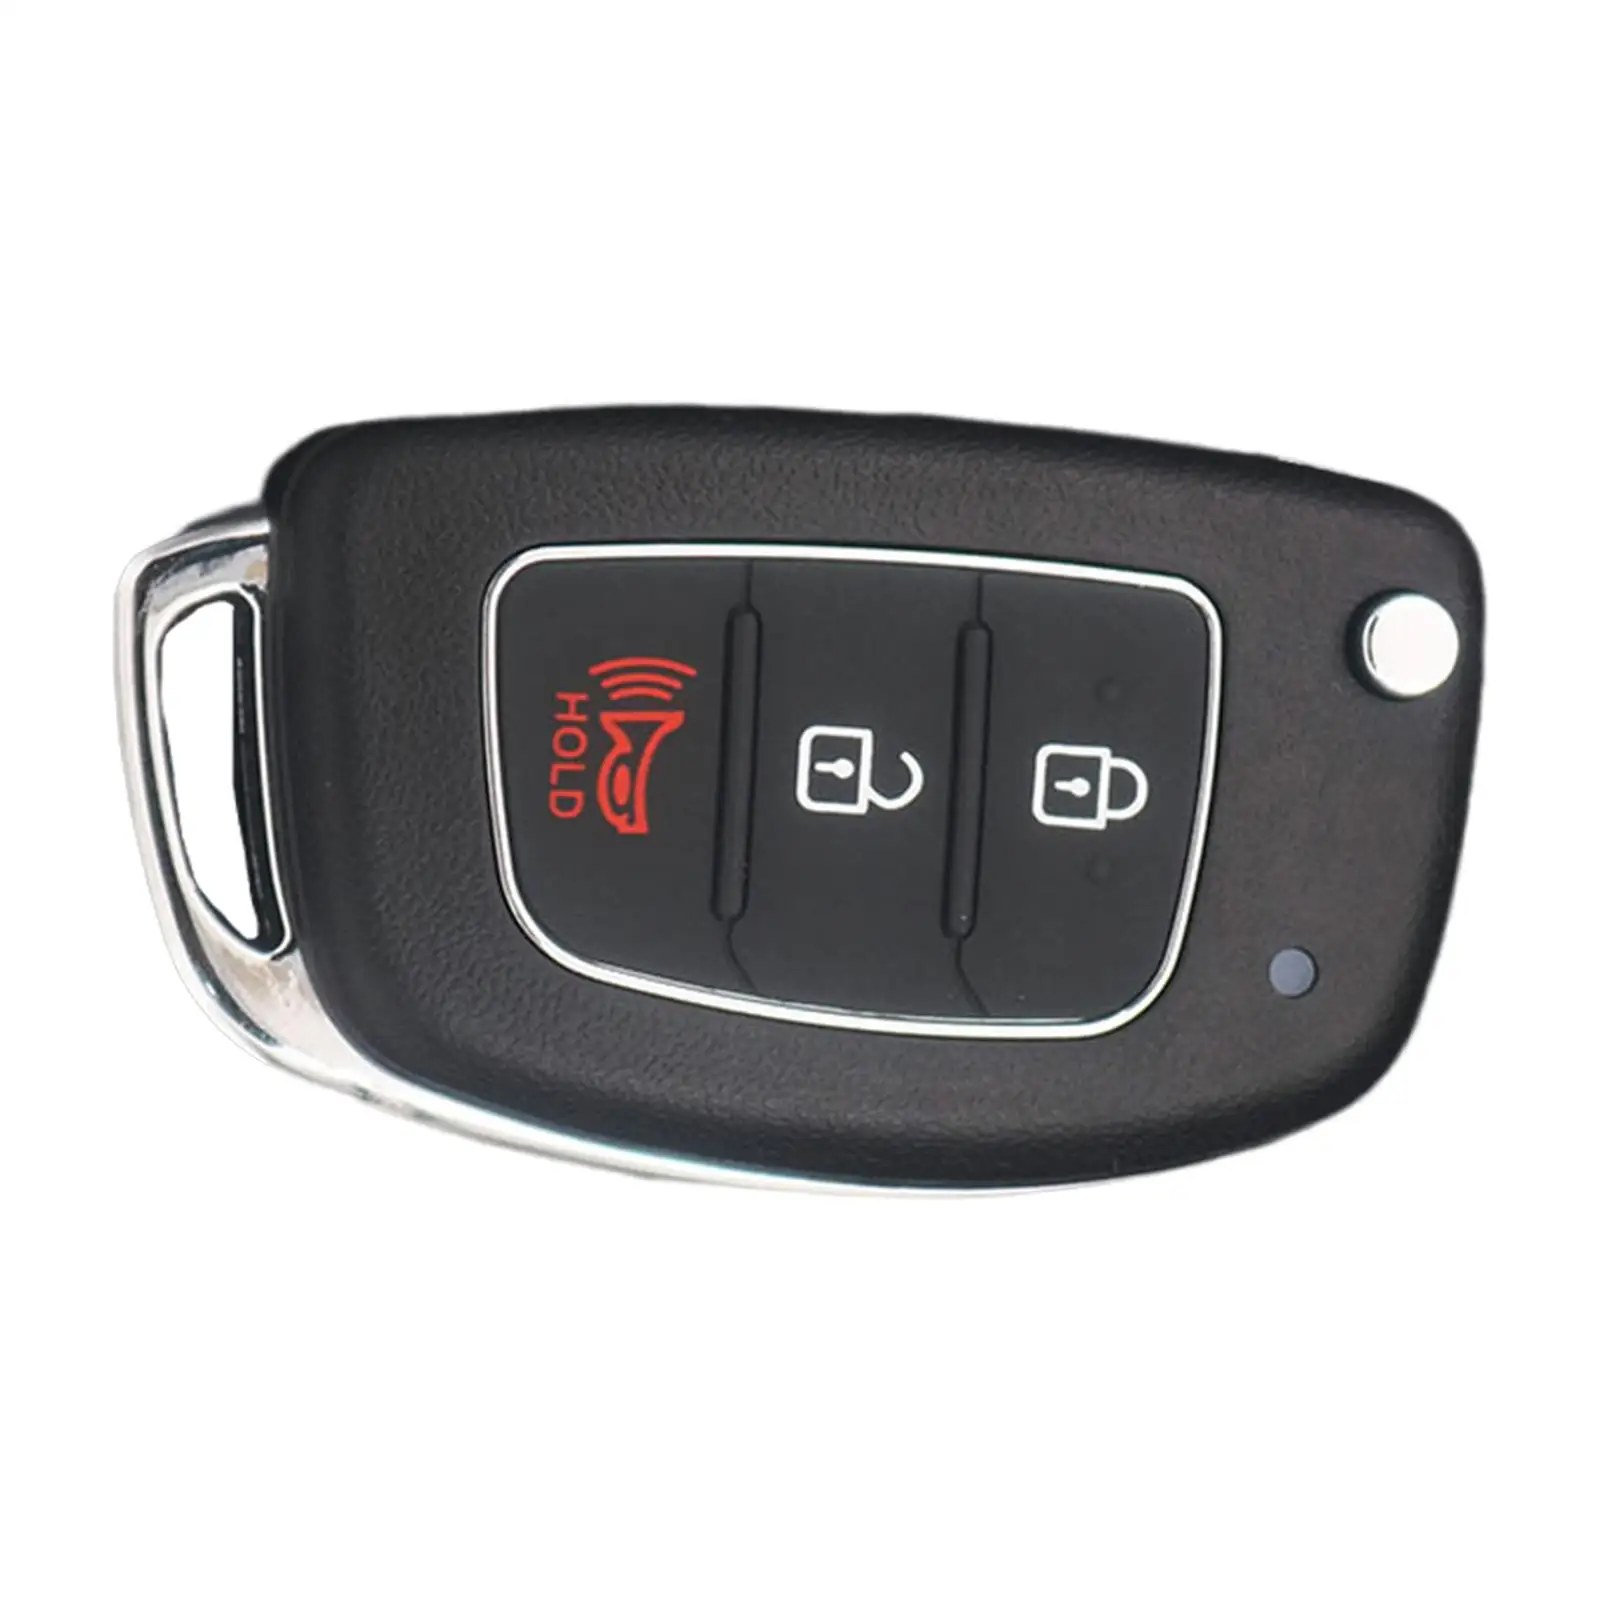 Folding Remote Car Key Shell Remote Control Case for Hyundai iX35 iX25